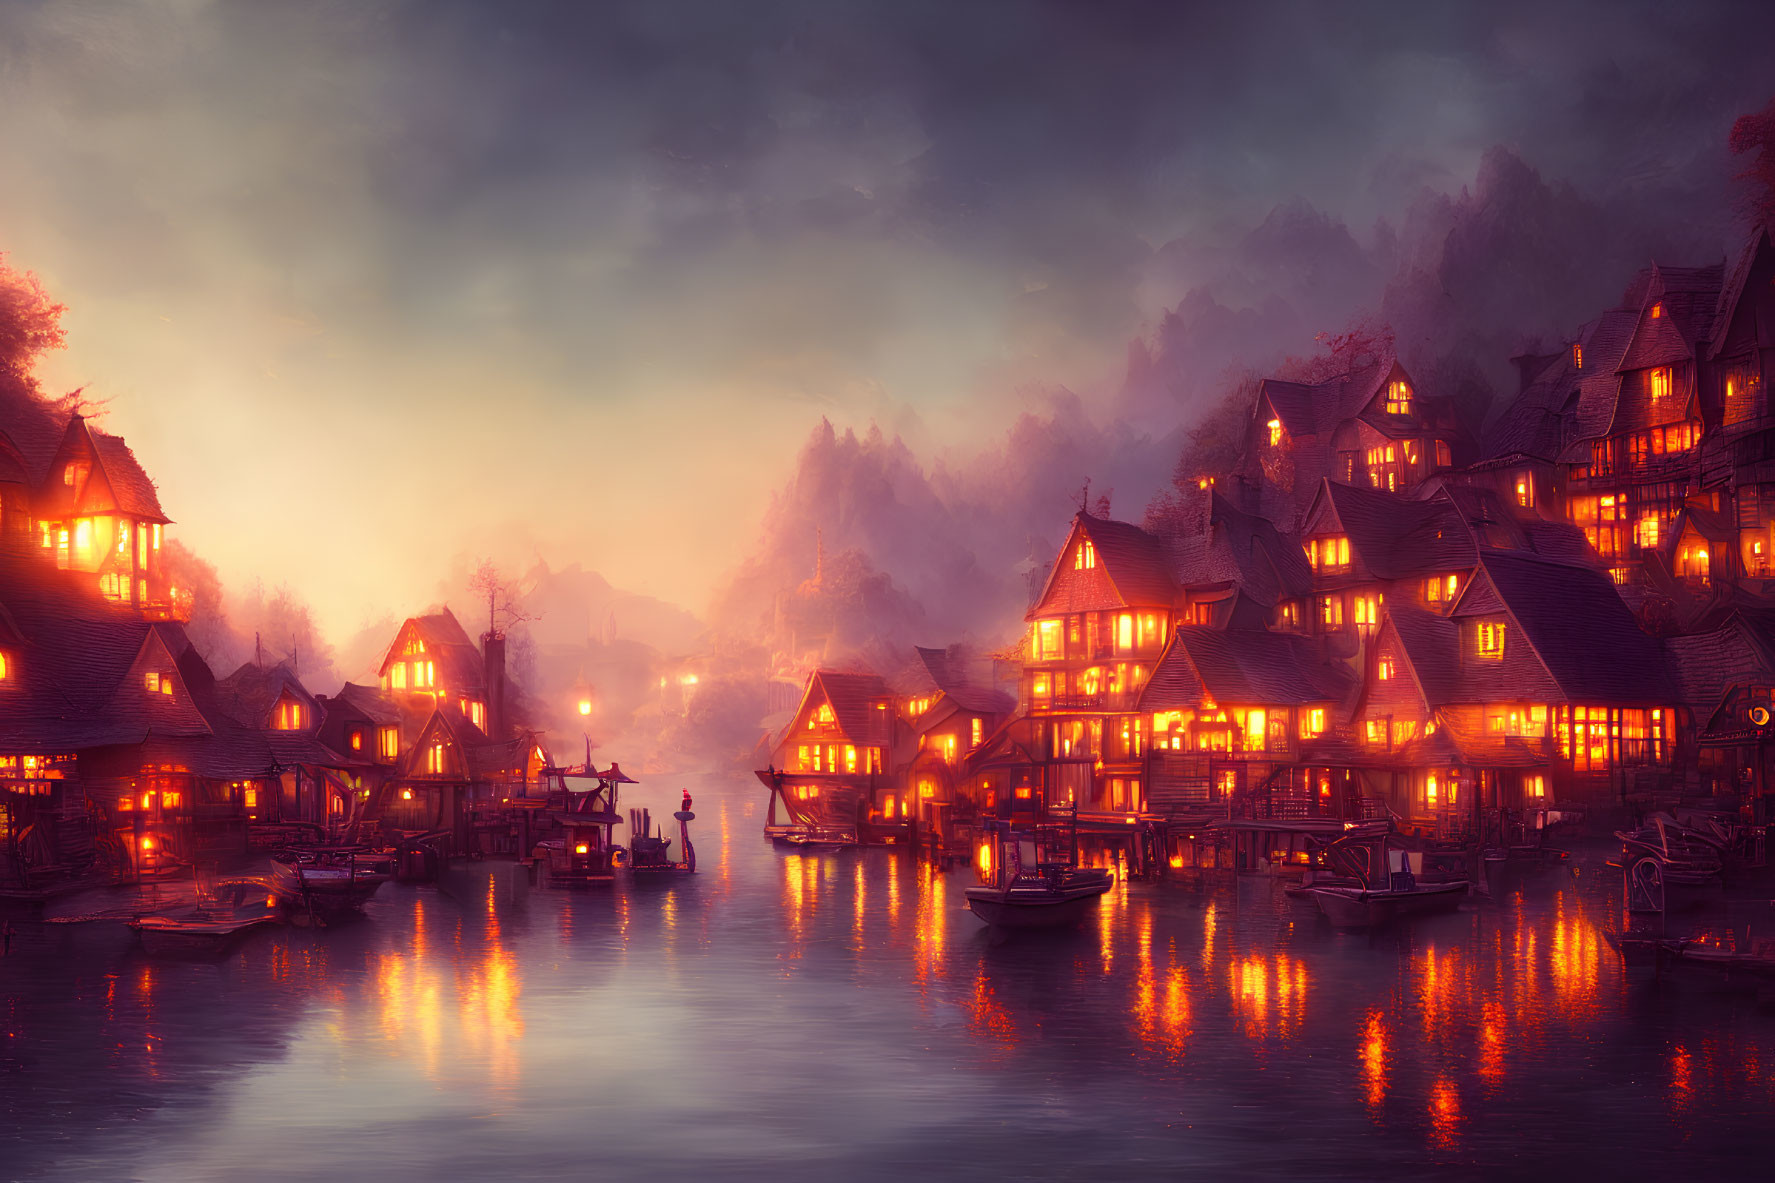 Twilight scene of warmly lit village reflected in river at dusk